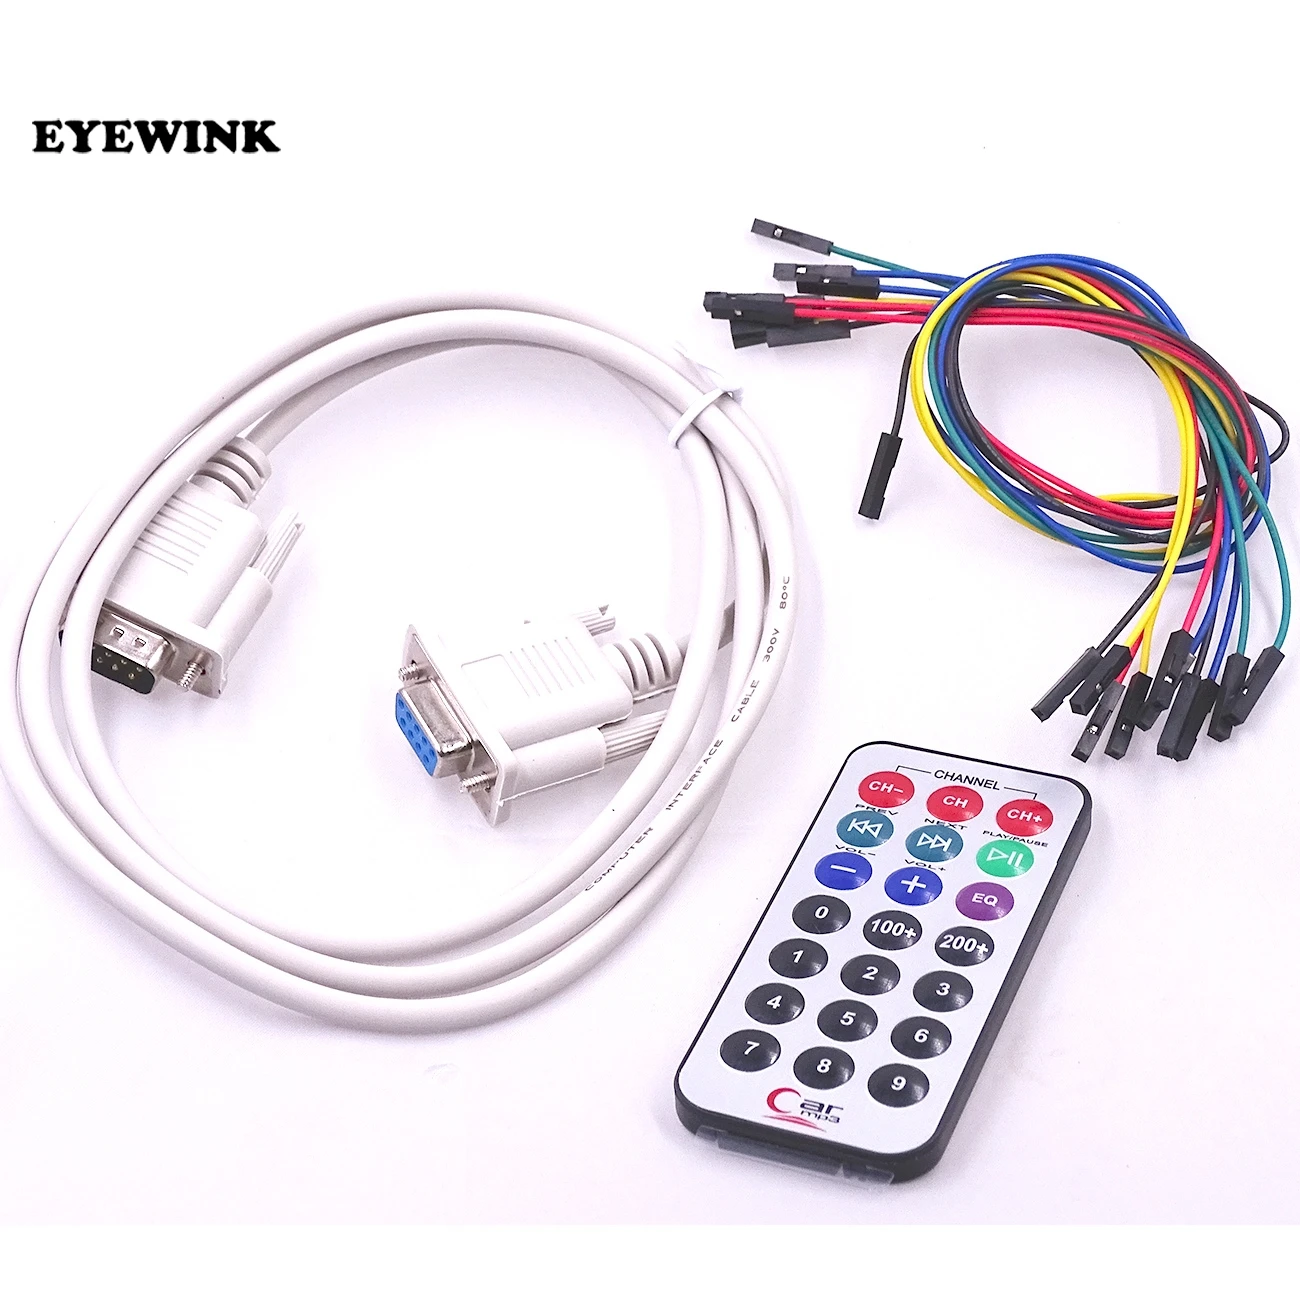 EYEWINK PIC MCU макетная мини-система PIC макетная плата+ микрочип PIC16F877A+ USB кабель